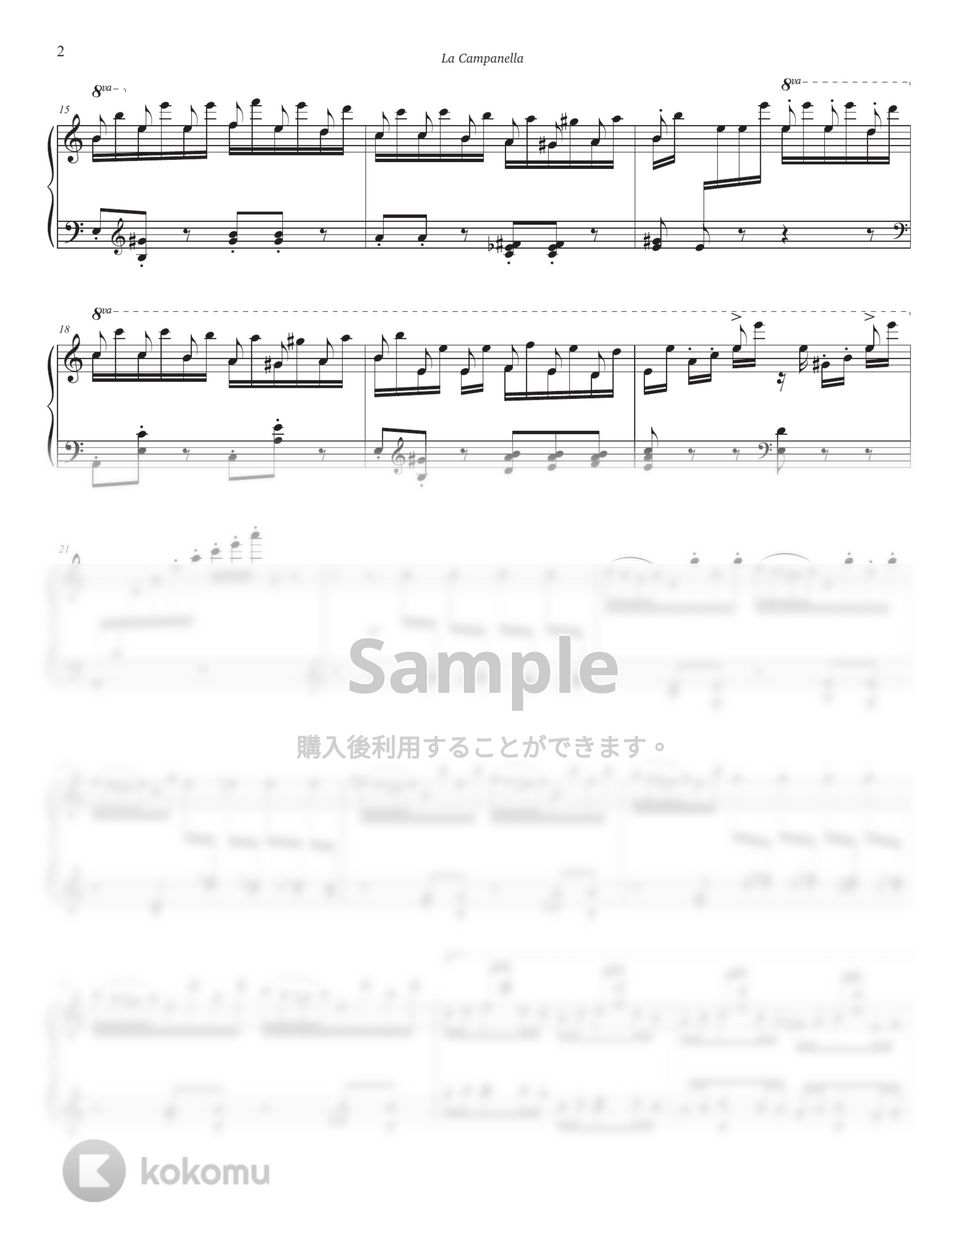 F. Liszt - La Campanella (中間レベル, Am key) by Jinnie J